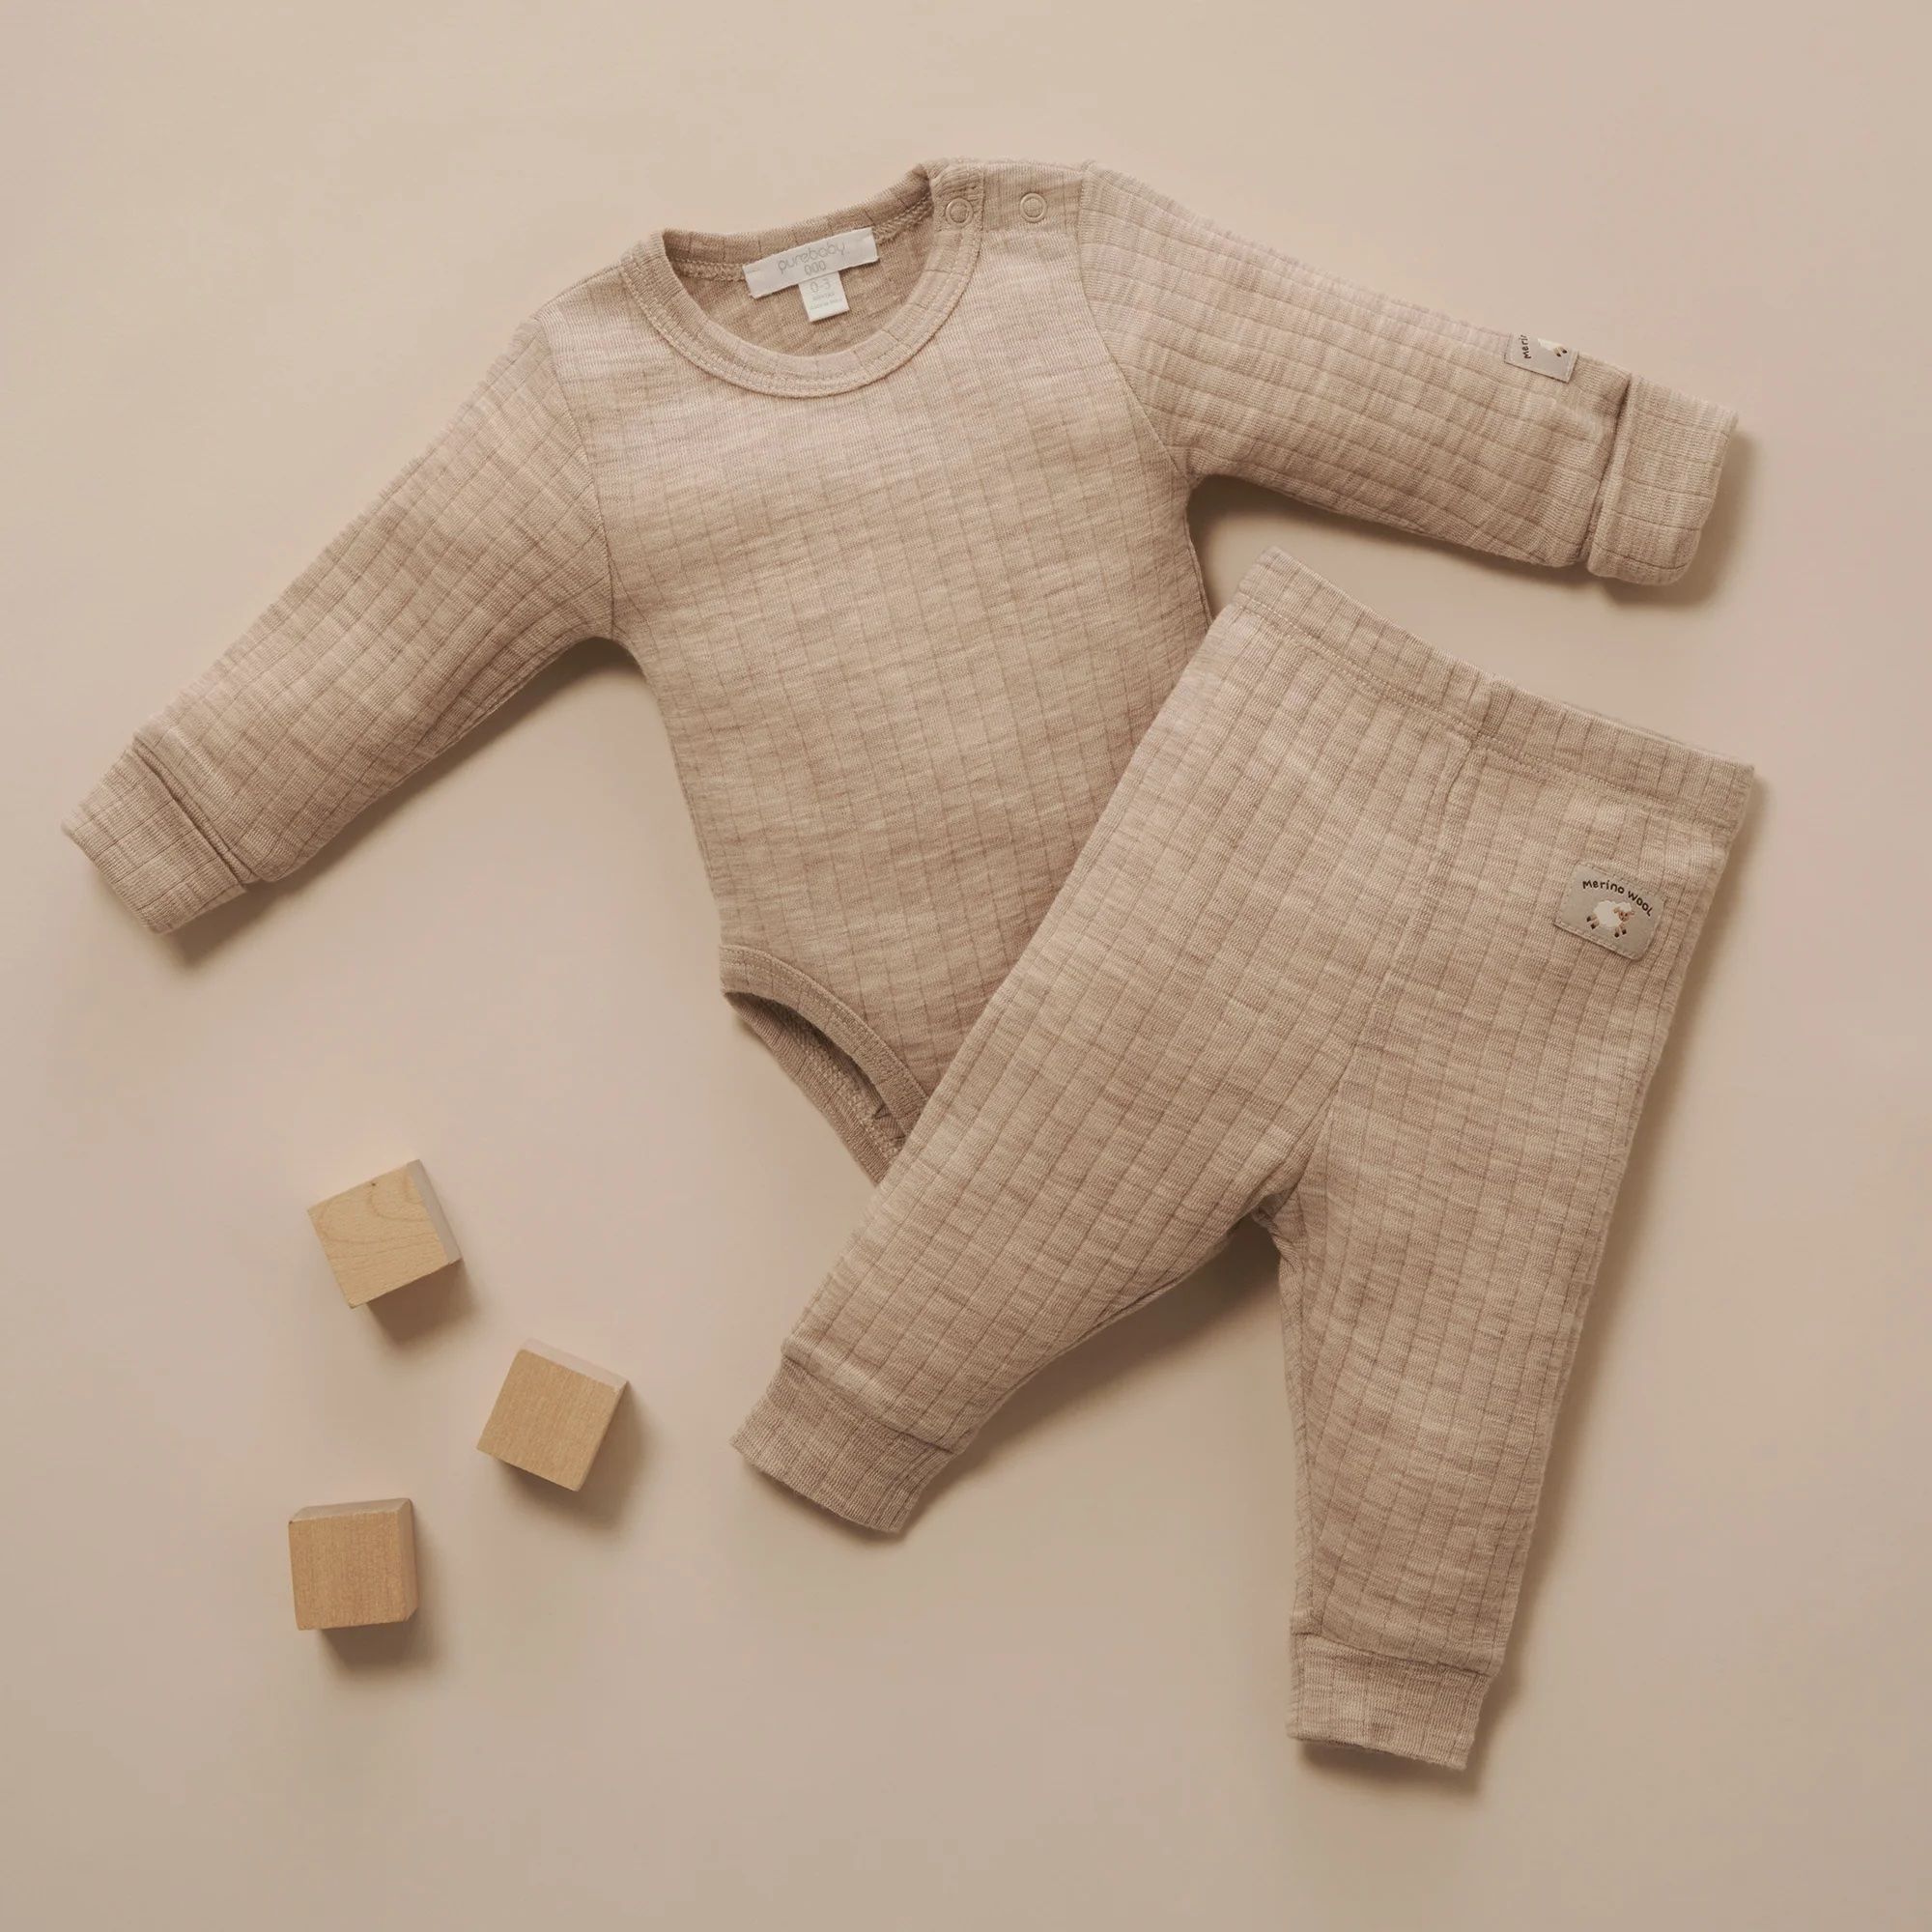 What are the Benefits of Merino Wool for Babies - Purebaby - Purebaby